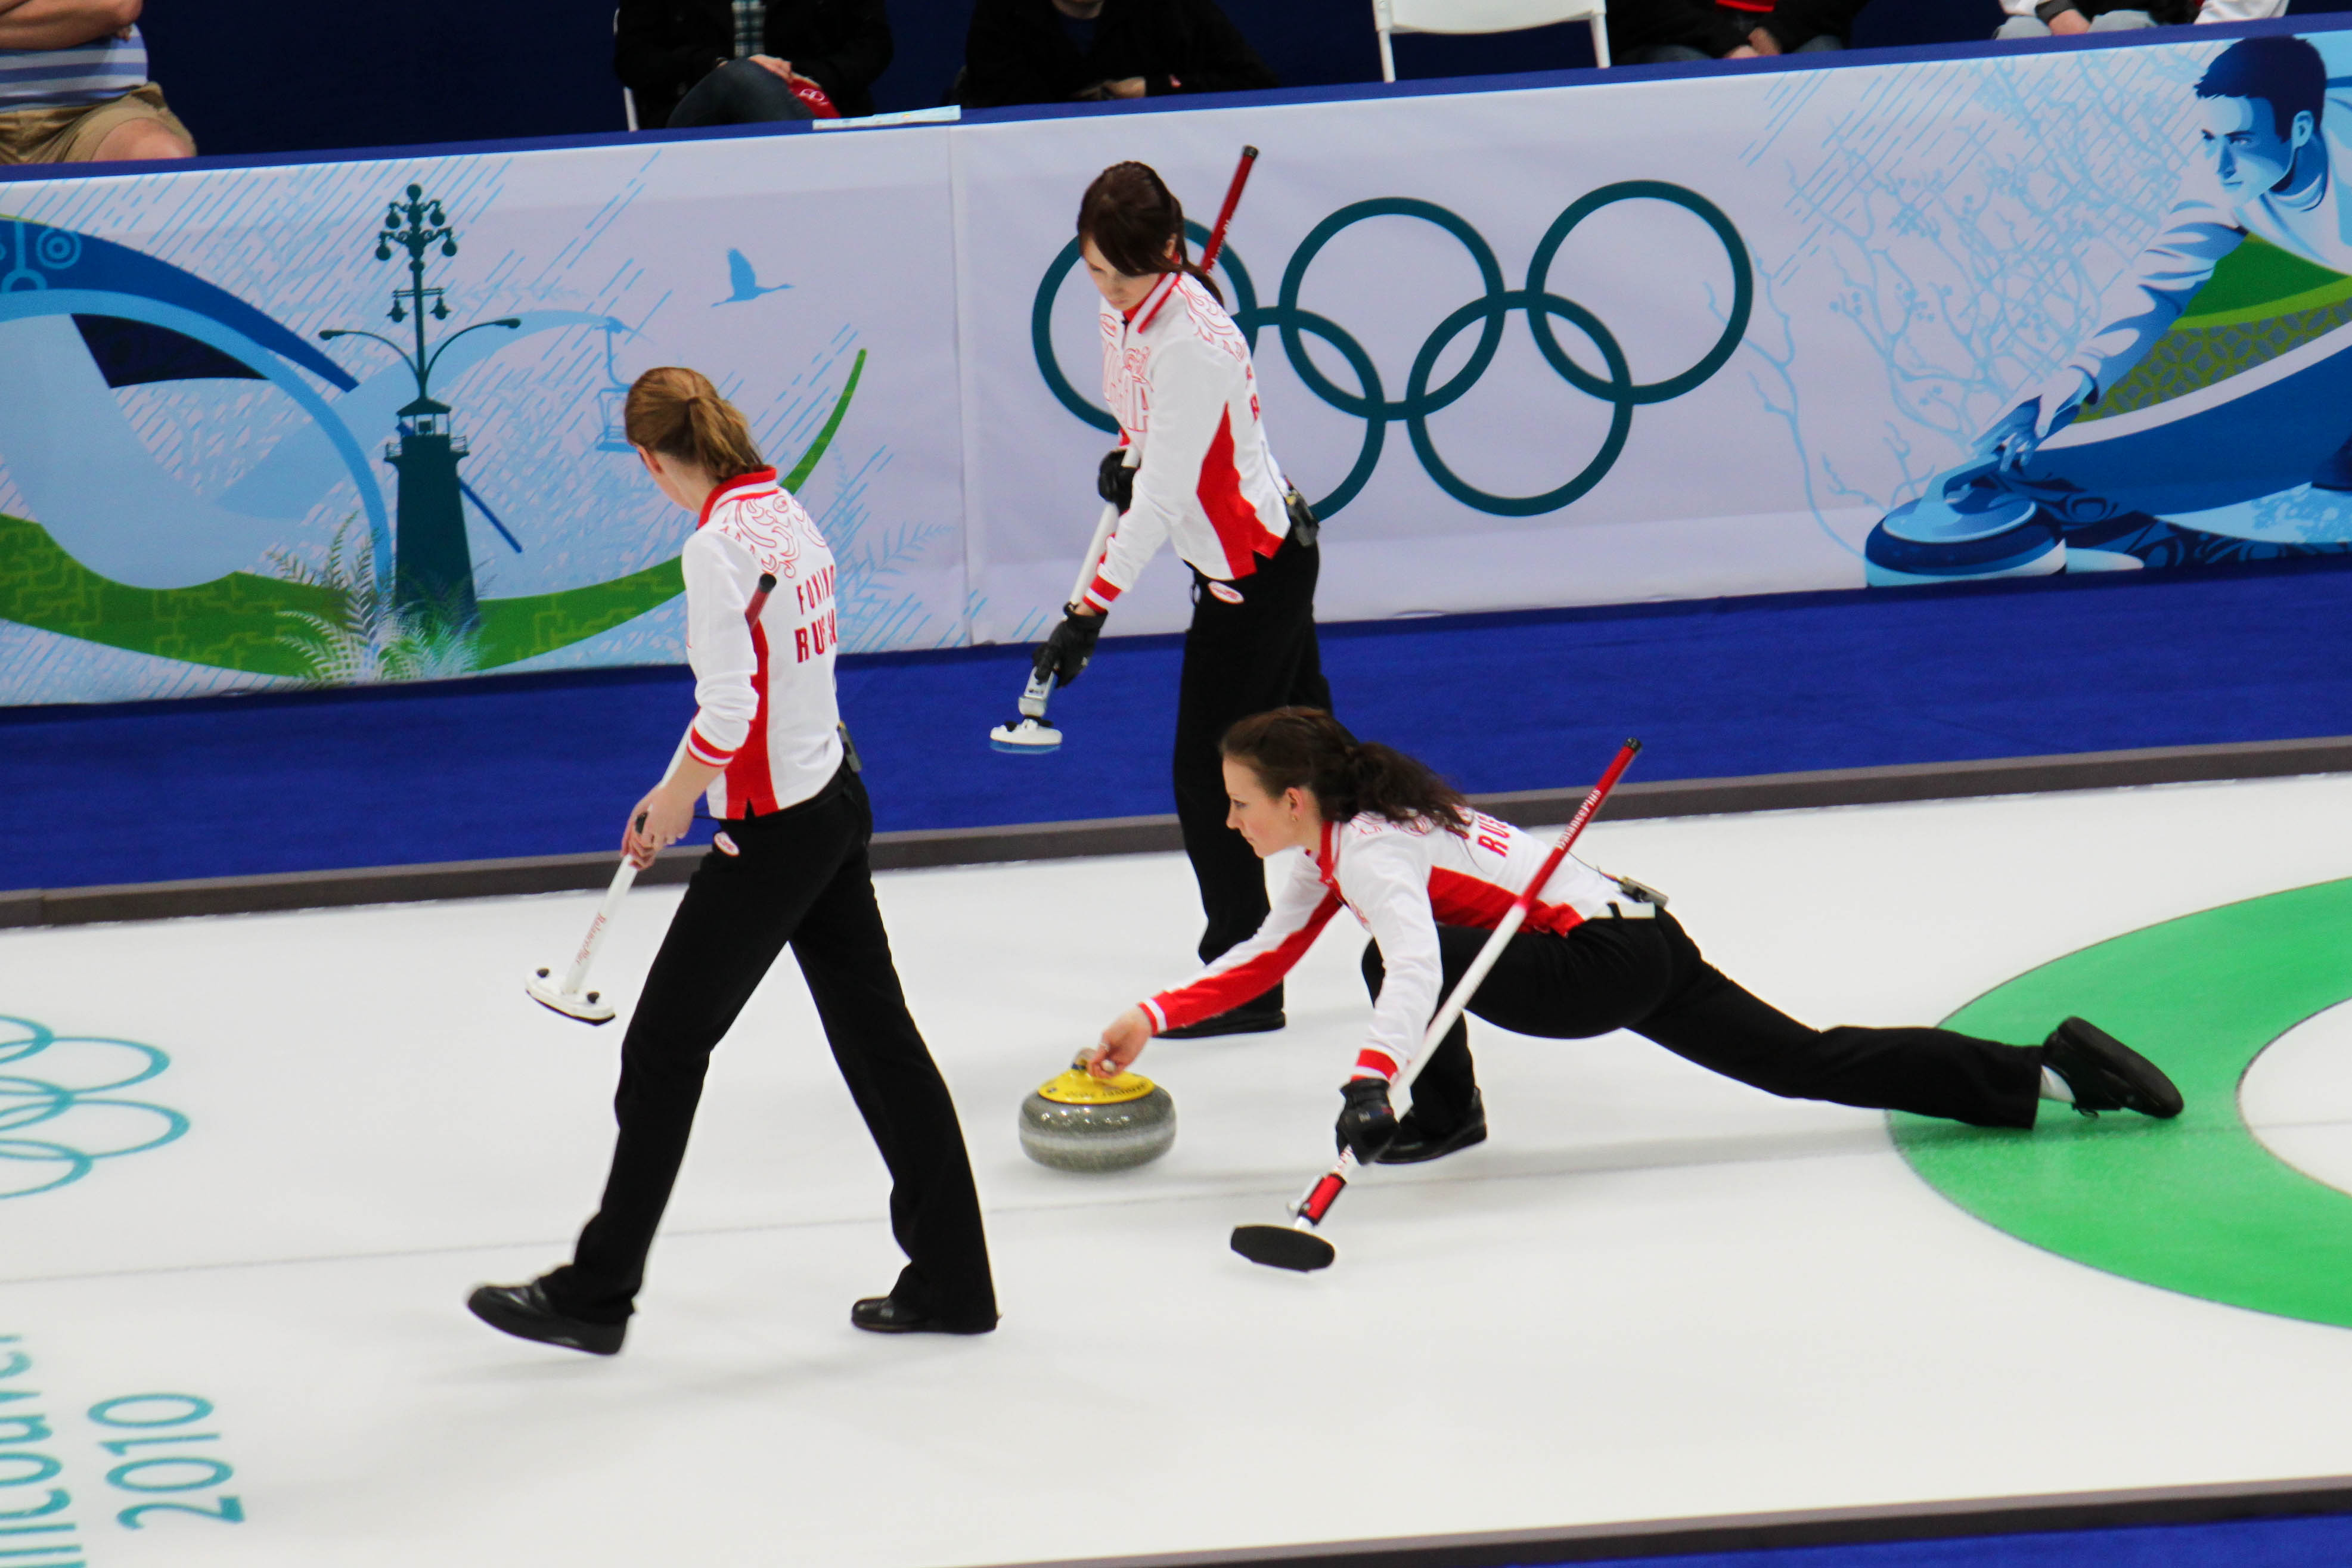 http://upload.wikimedia.org/wikipedia/commons/b/bb/Women's_Curling_Team_Russia_-_20_February_2010.jpg